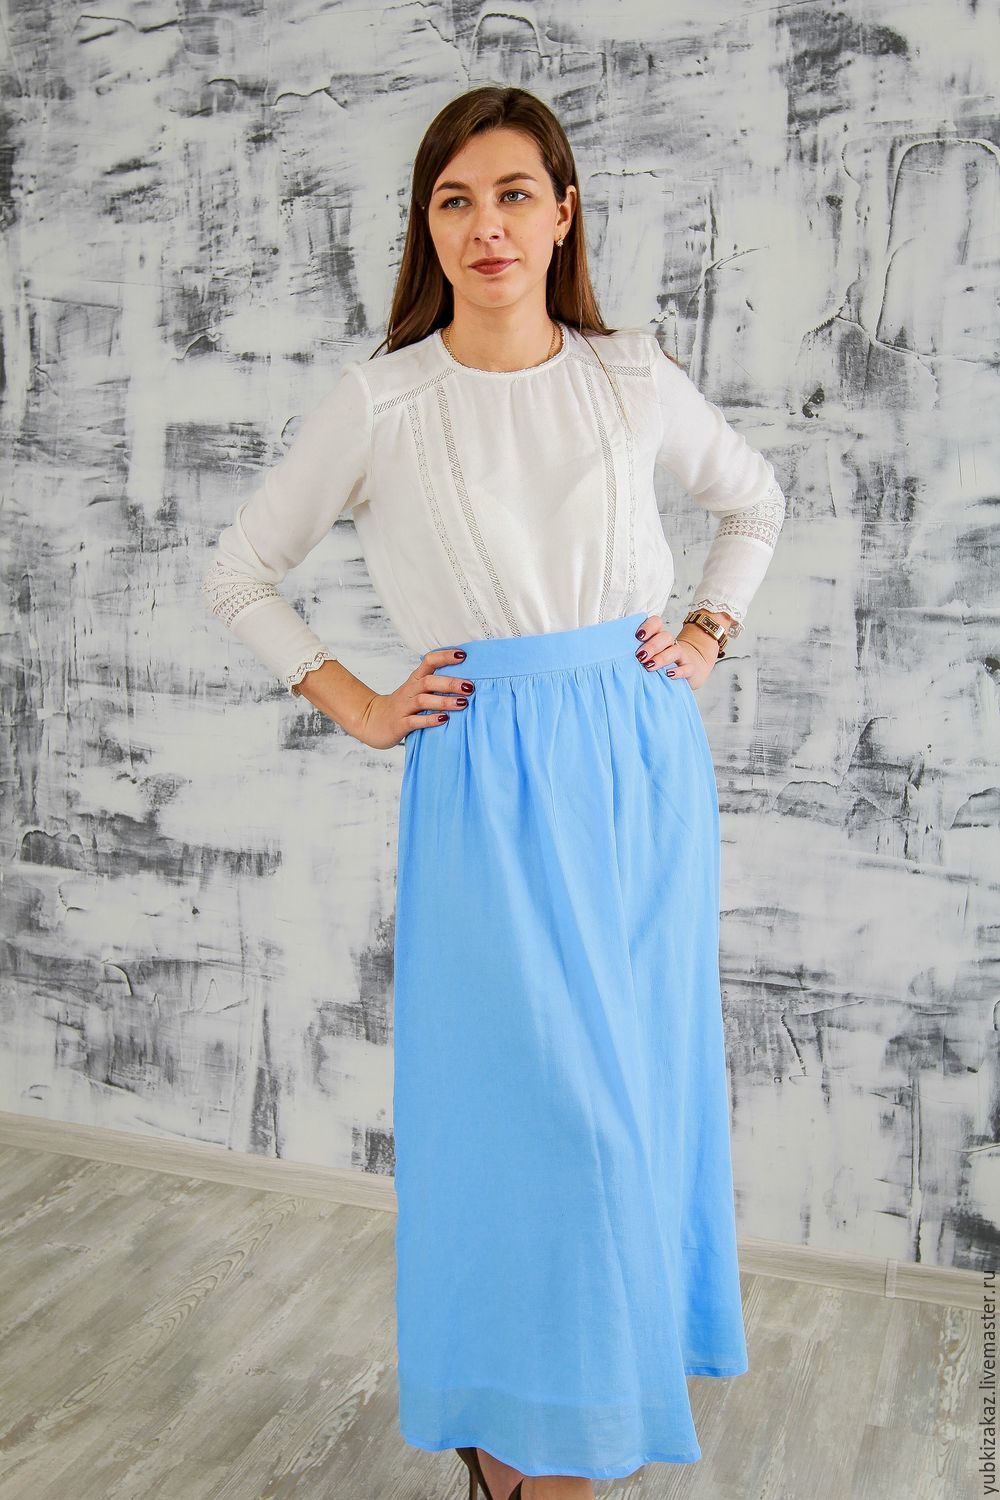 Blue skirt from Maliki
